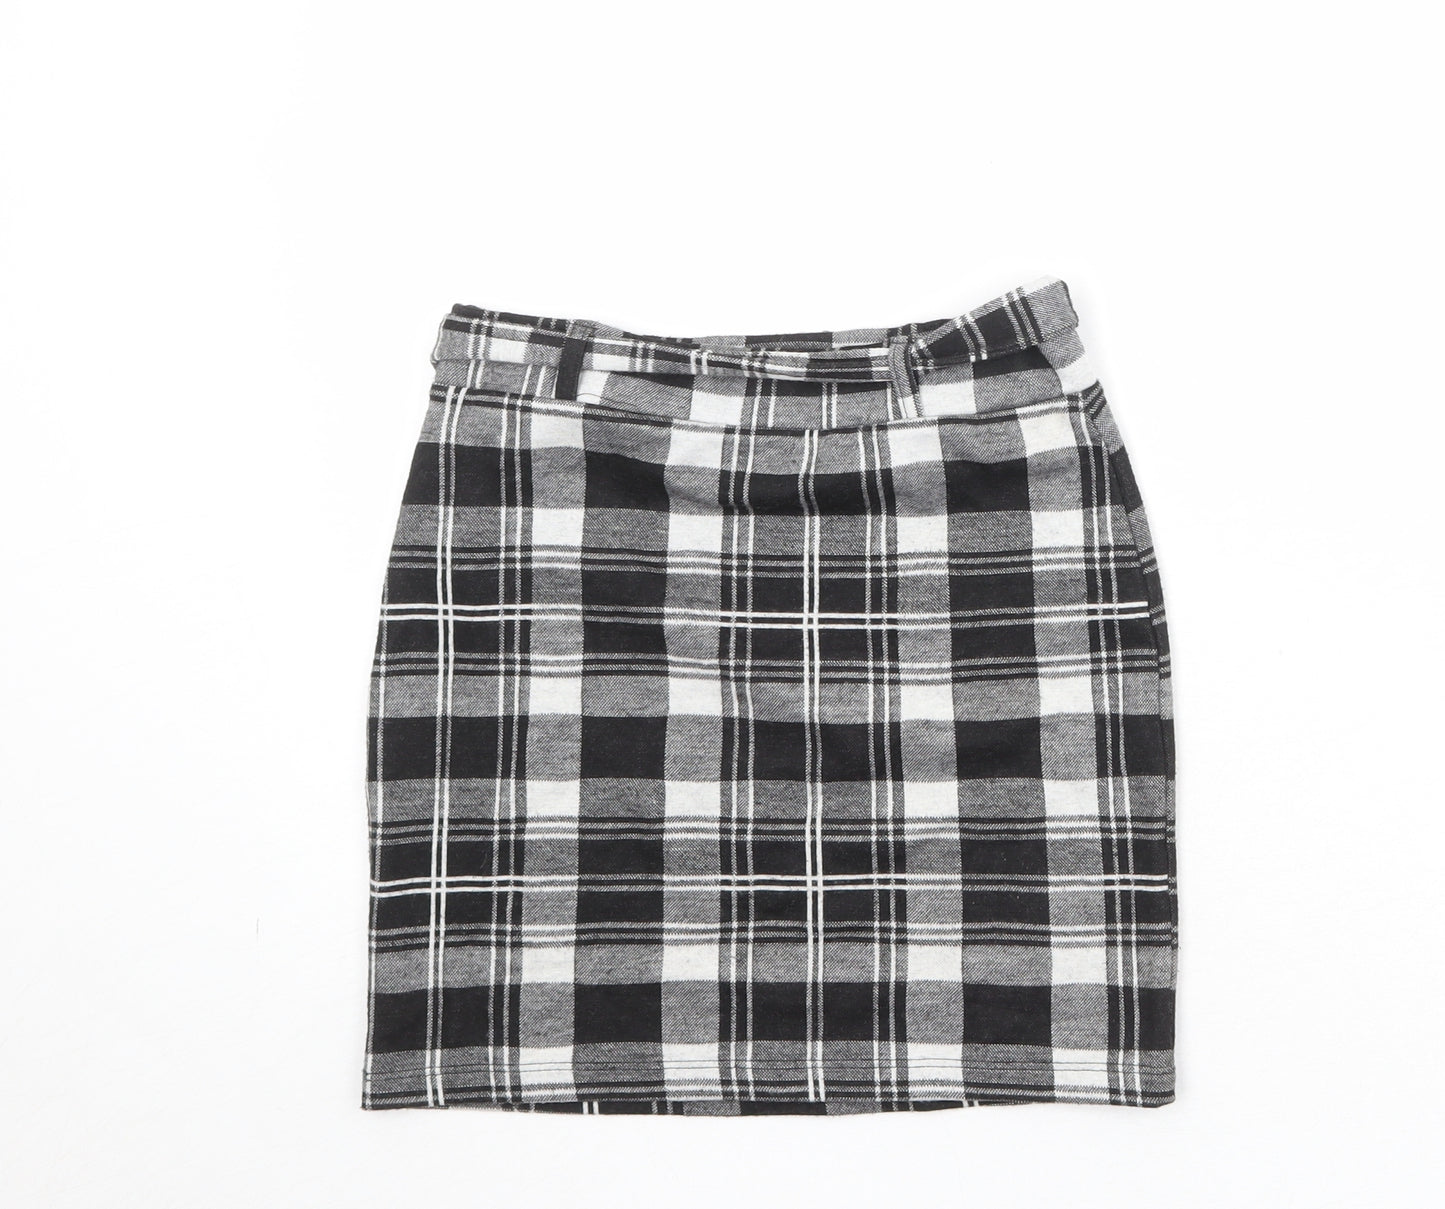 New Look Girls Black Plaid Viscose Mini Skirt Size 12-13 Years Regular Pull On